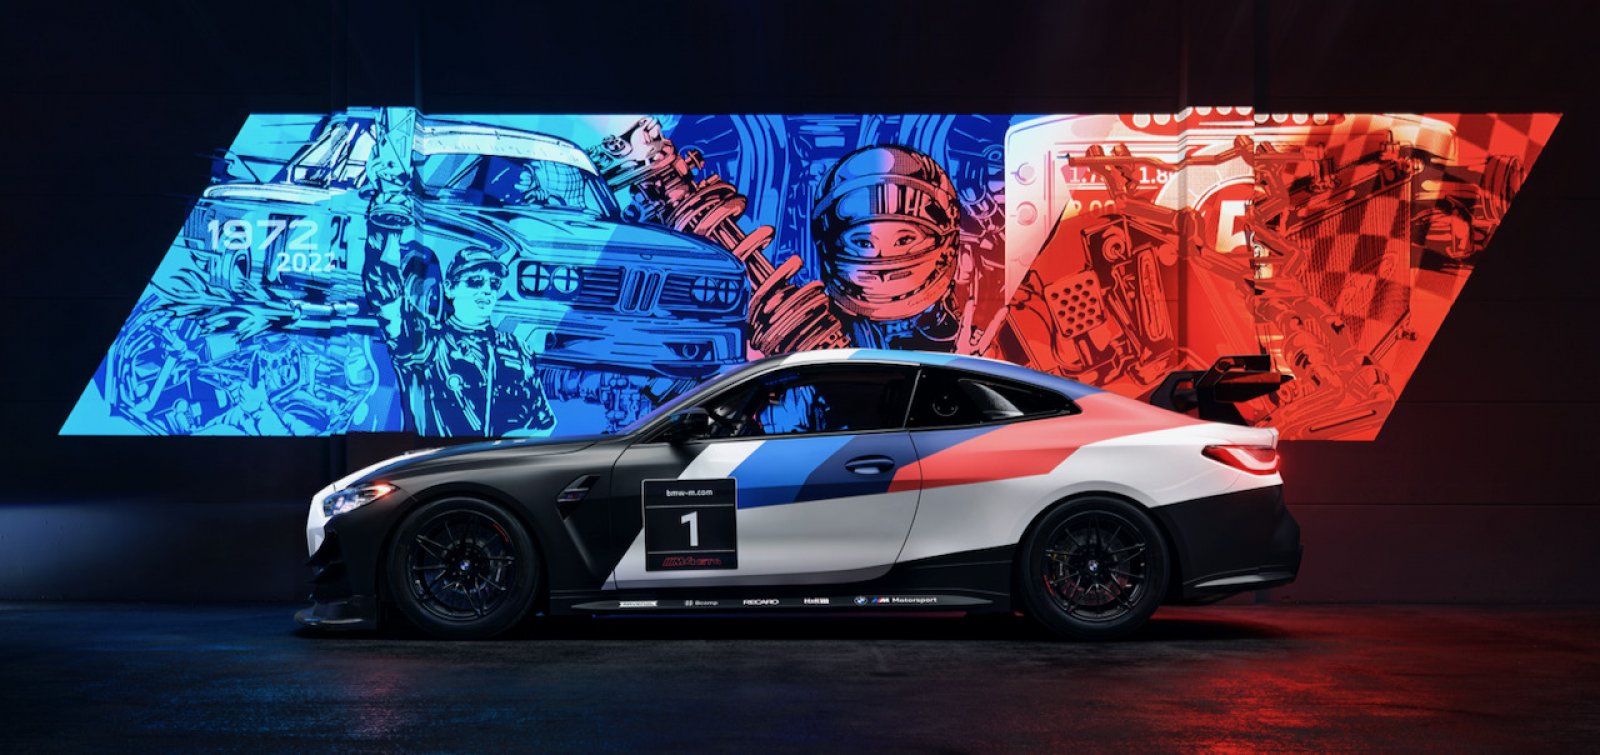 Presentation of the new BMW M4 GT4 with BMW M Motorsport design